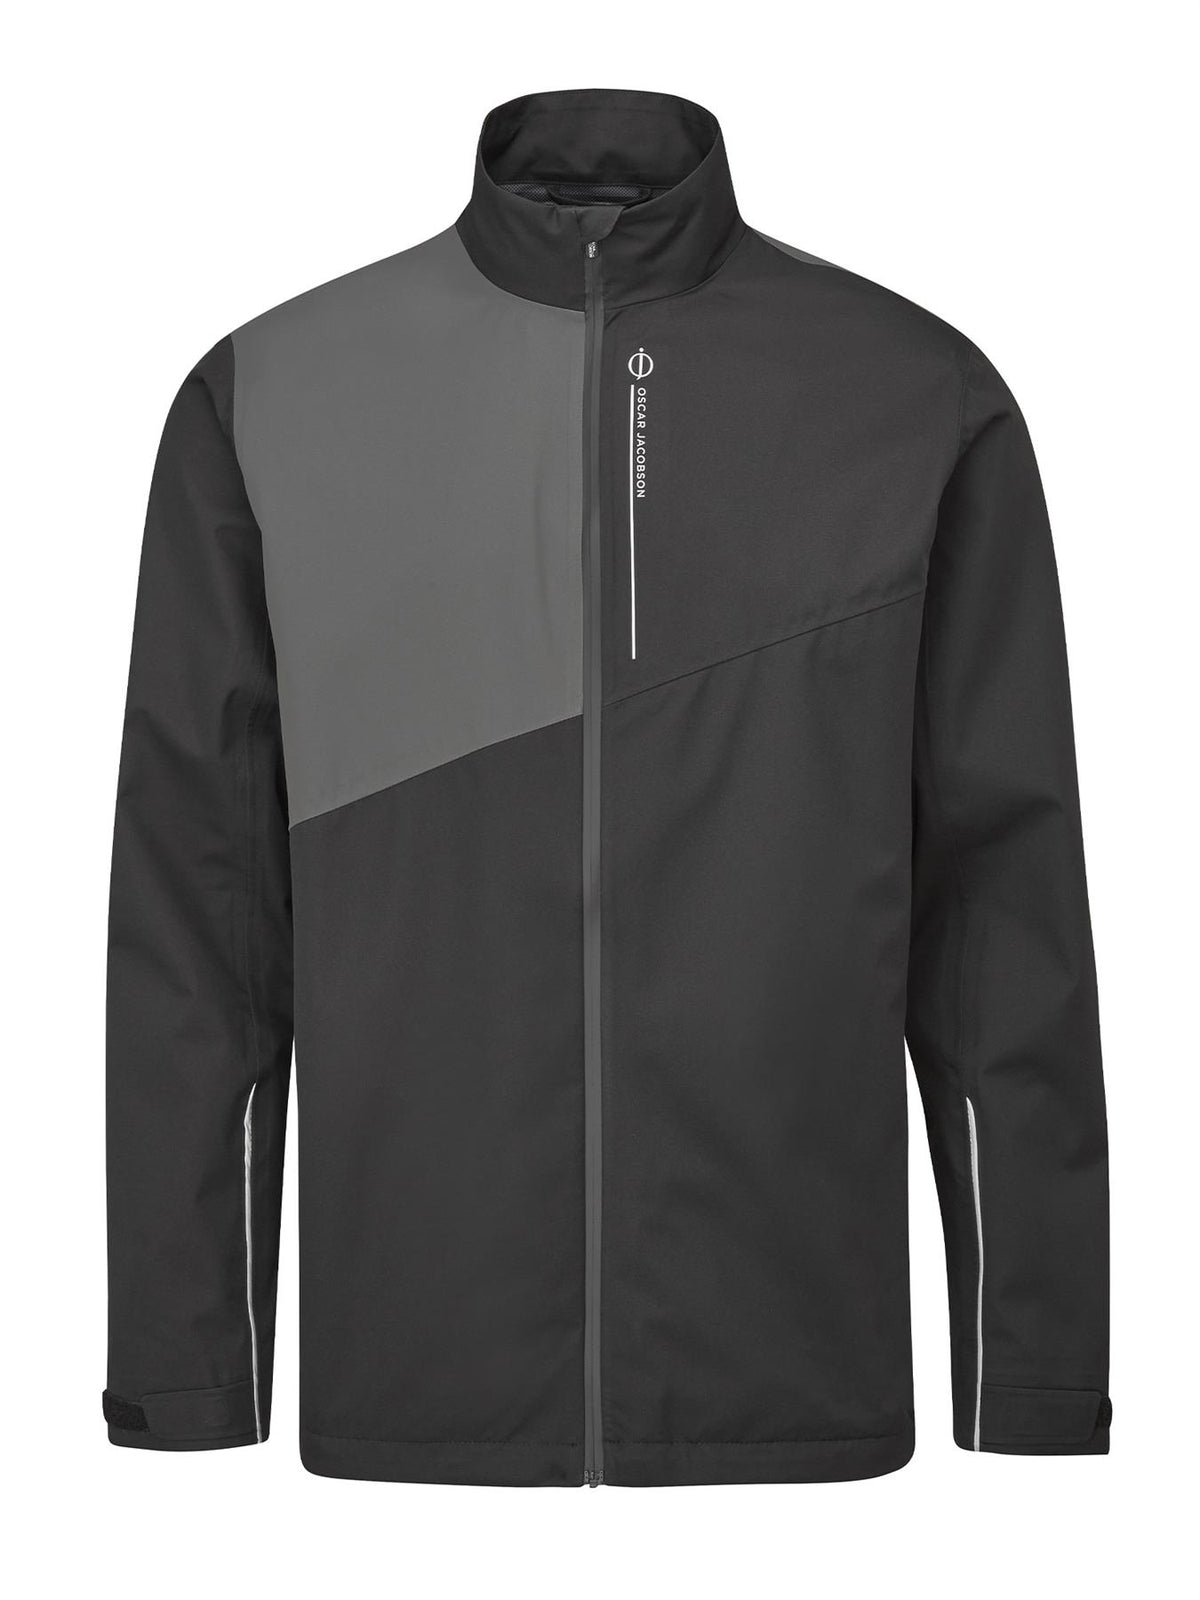 Greylands Lightweight Waterproof Jacket